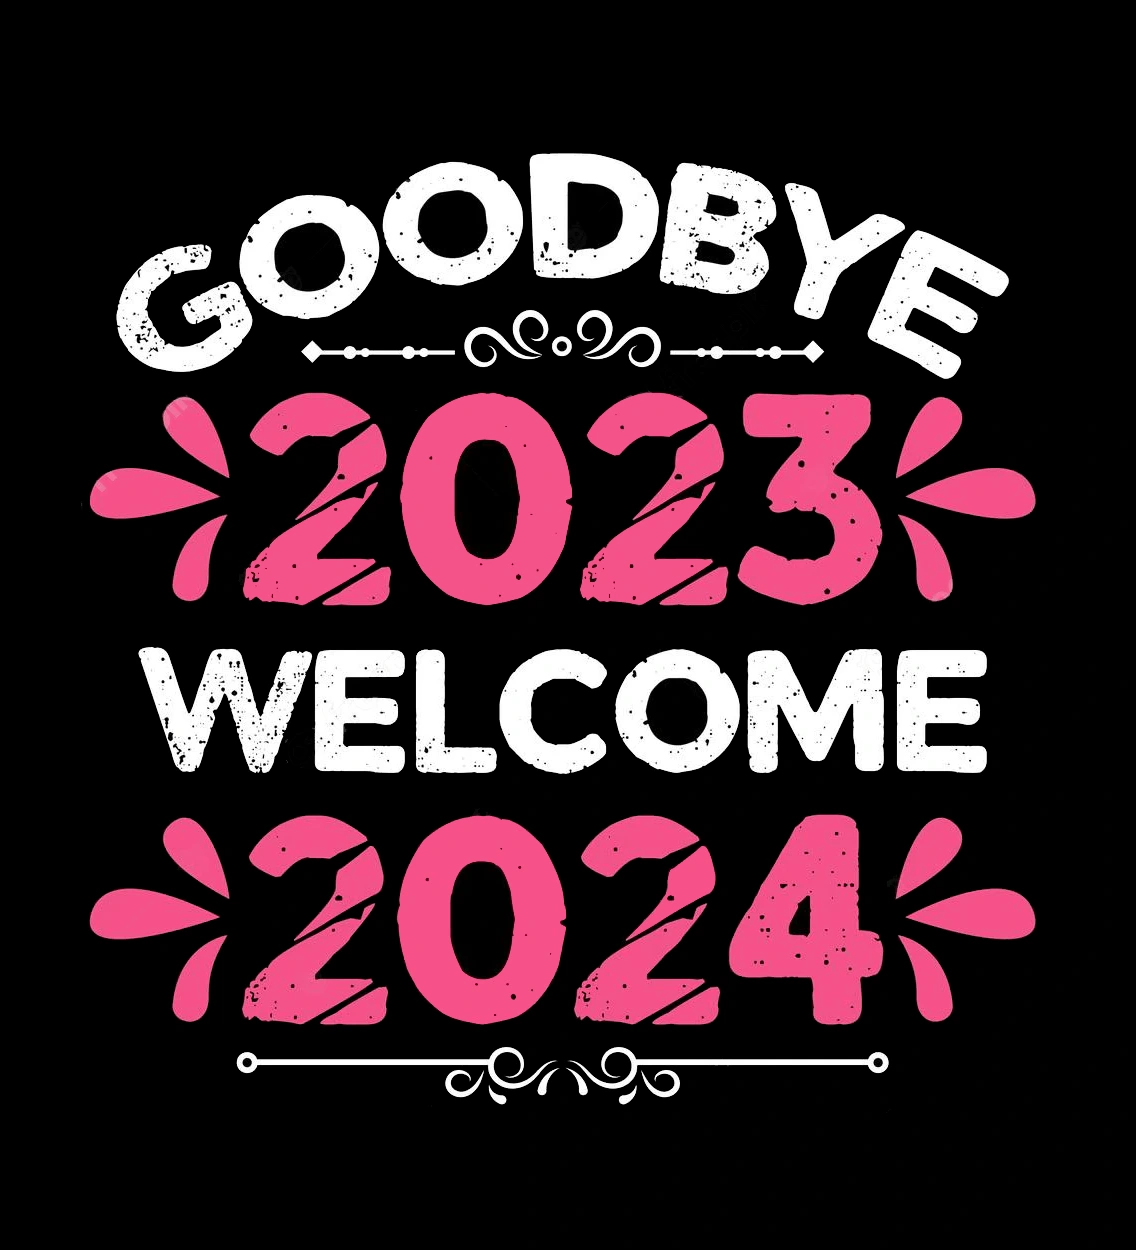 goodbye 2023 welcome 2024 t shirt design new year t shirt design